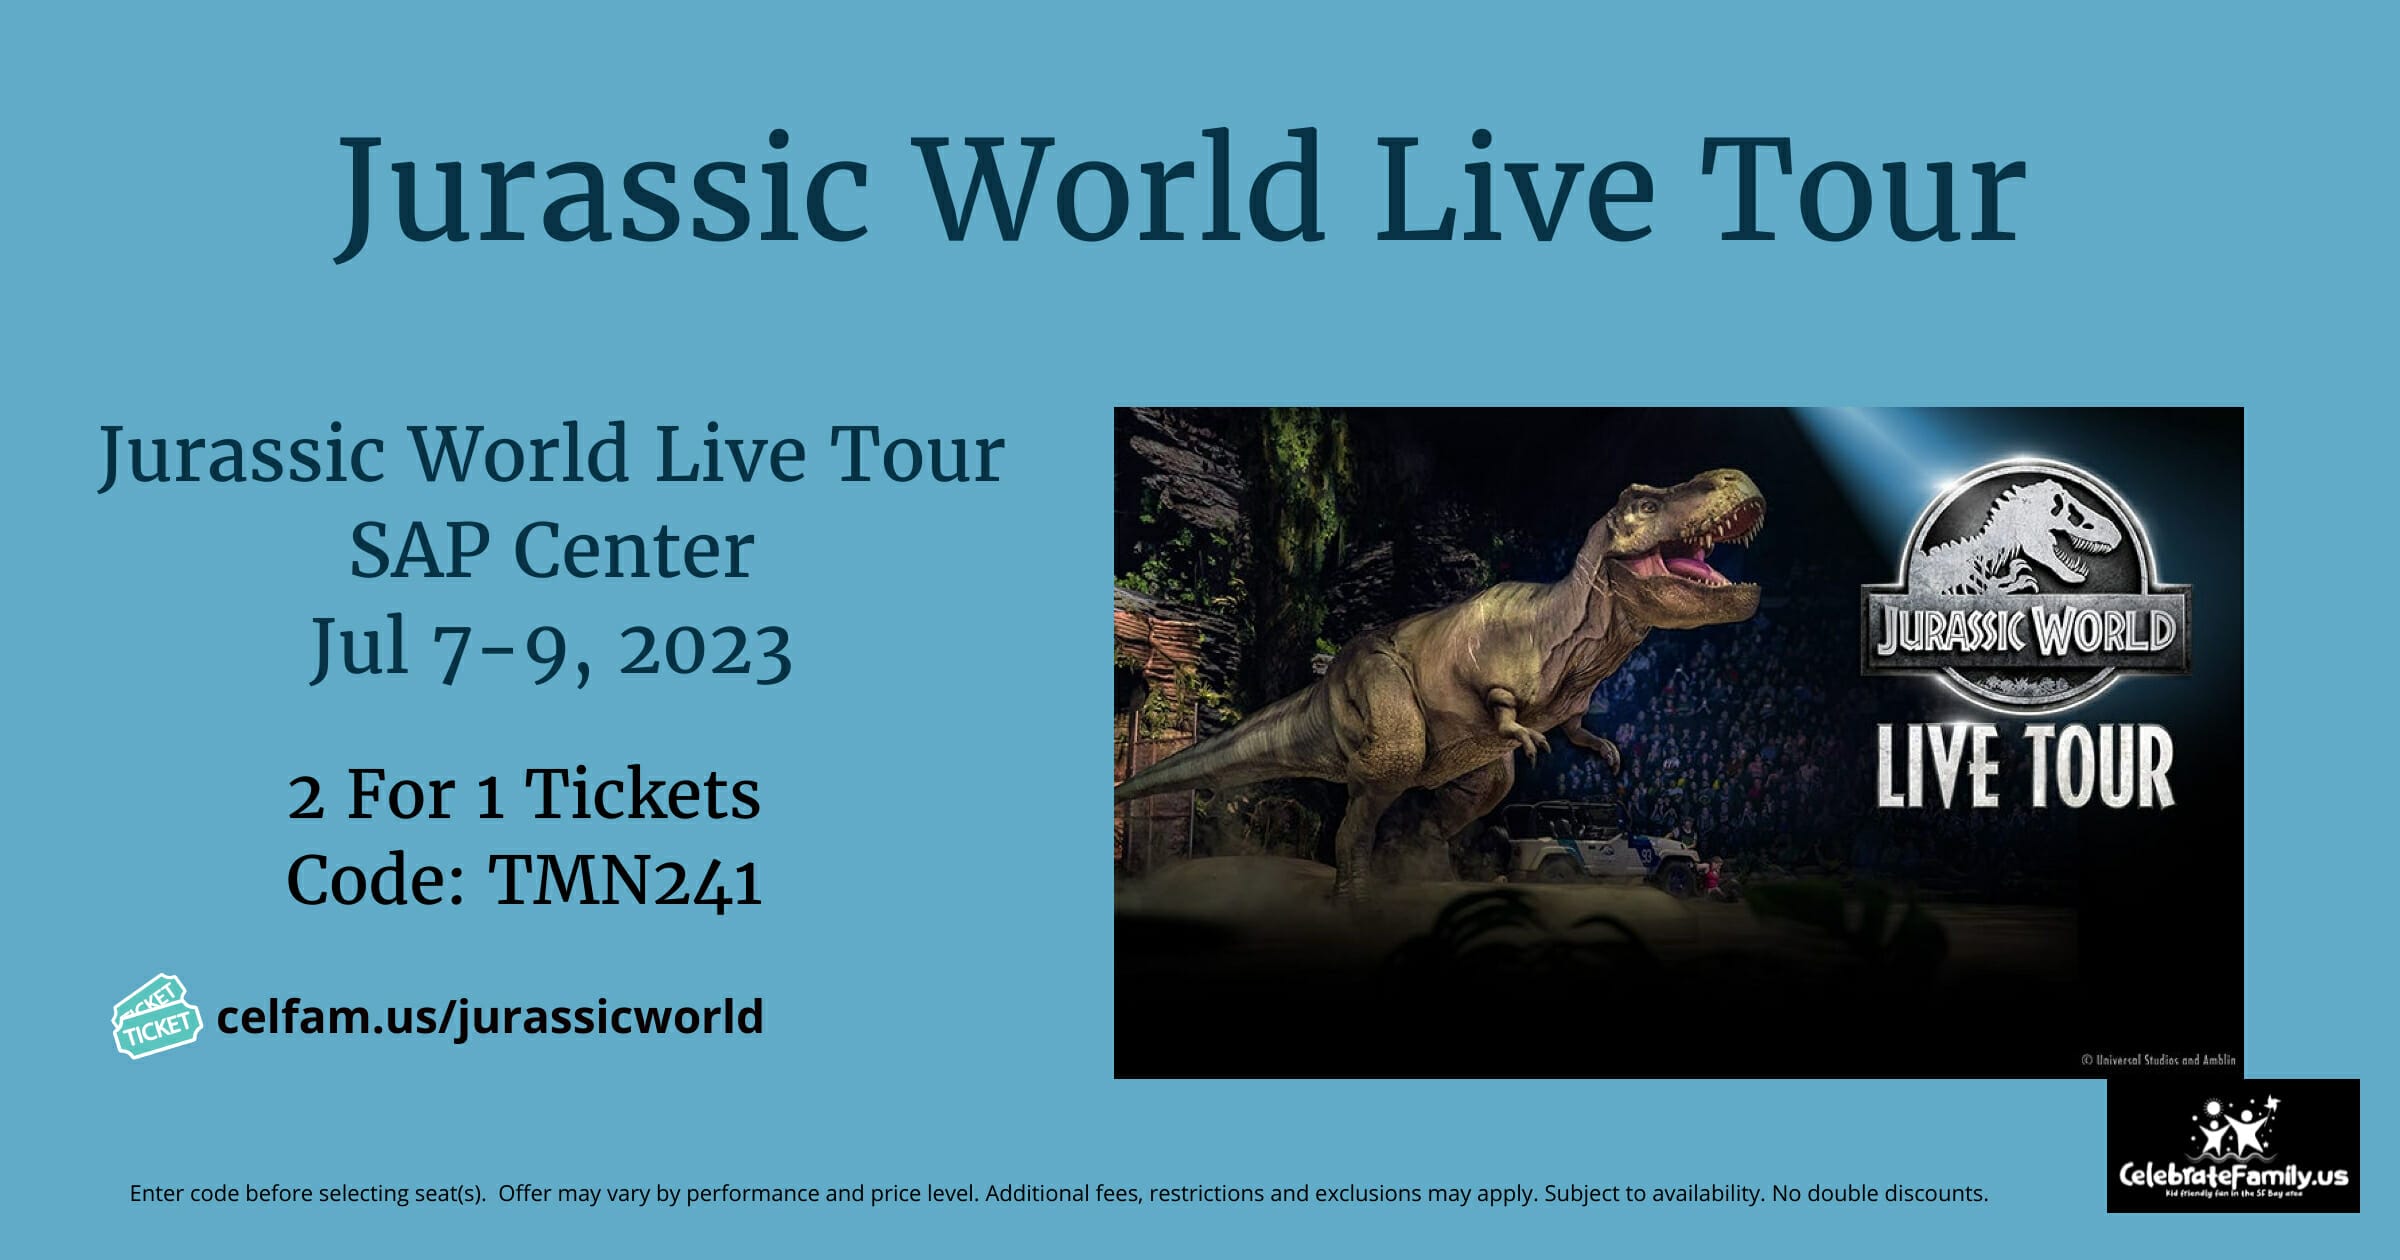 Jurassic World Live Tour SAP Center Jul 7-9, 2023